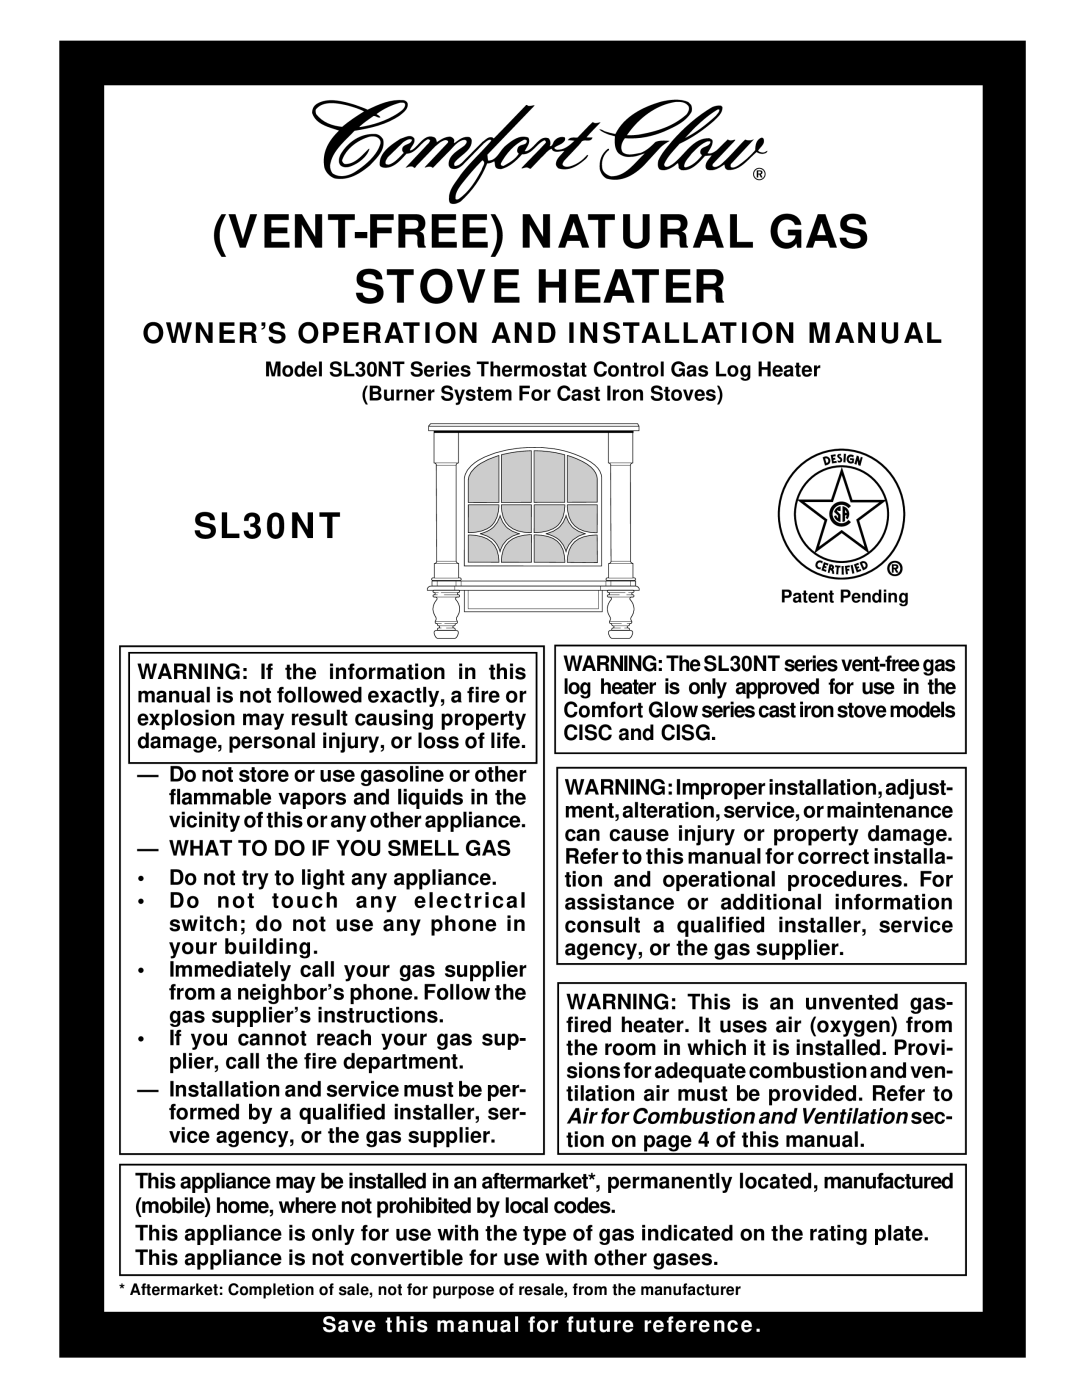 Desa Tech SL30NT installation manual Owner’S Operation And Installation Manual, Vent-Freenatural Gas Stove Heater 